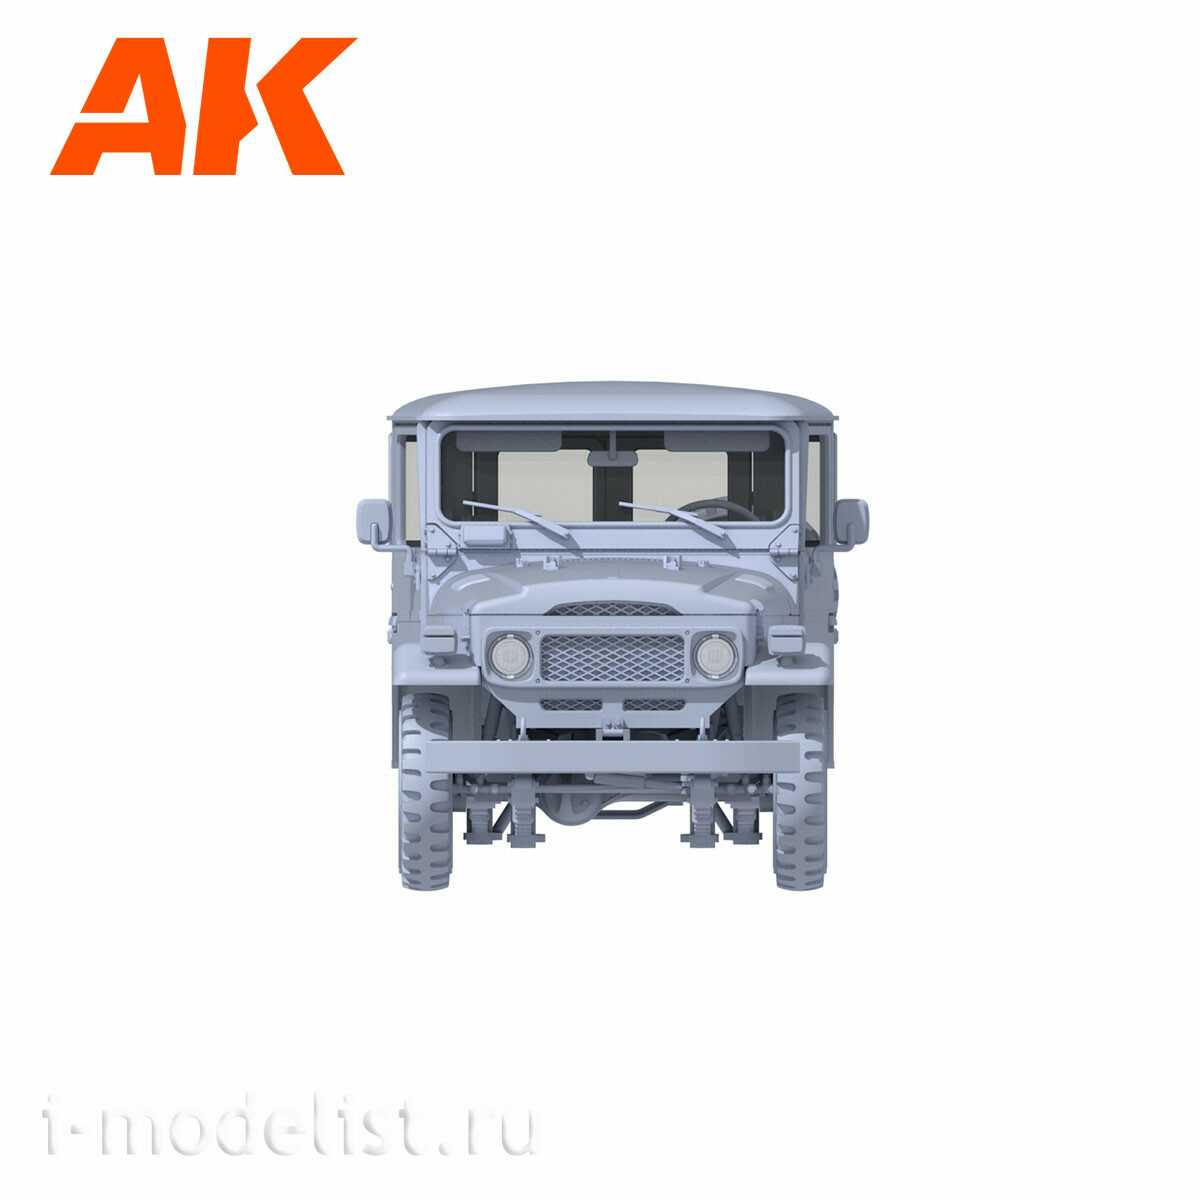 AK35001 AK Interactive 1/35 Внедорожник FJ43 SUV с жёстким верхом